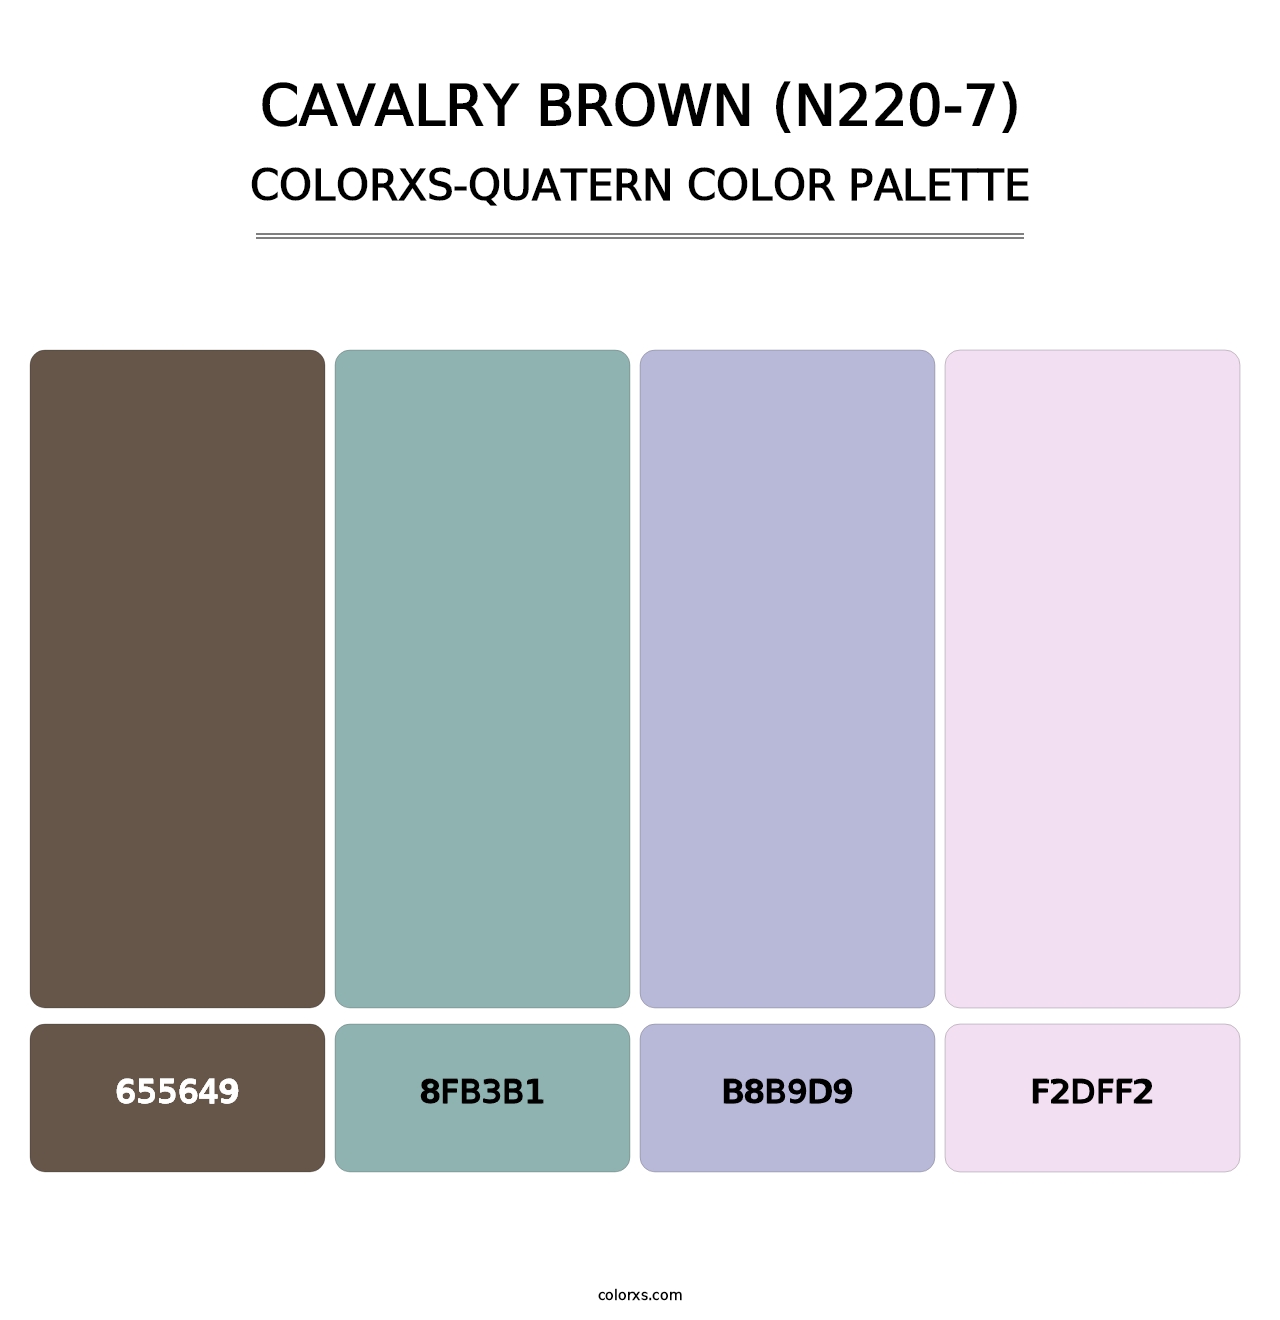 Cavalry Brown (N220-7) - Colorxs Quatern Palette